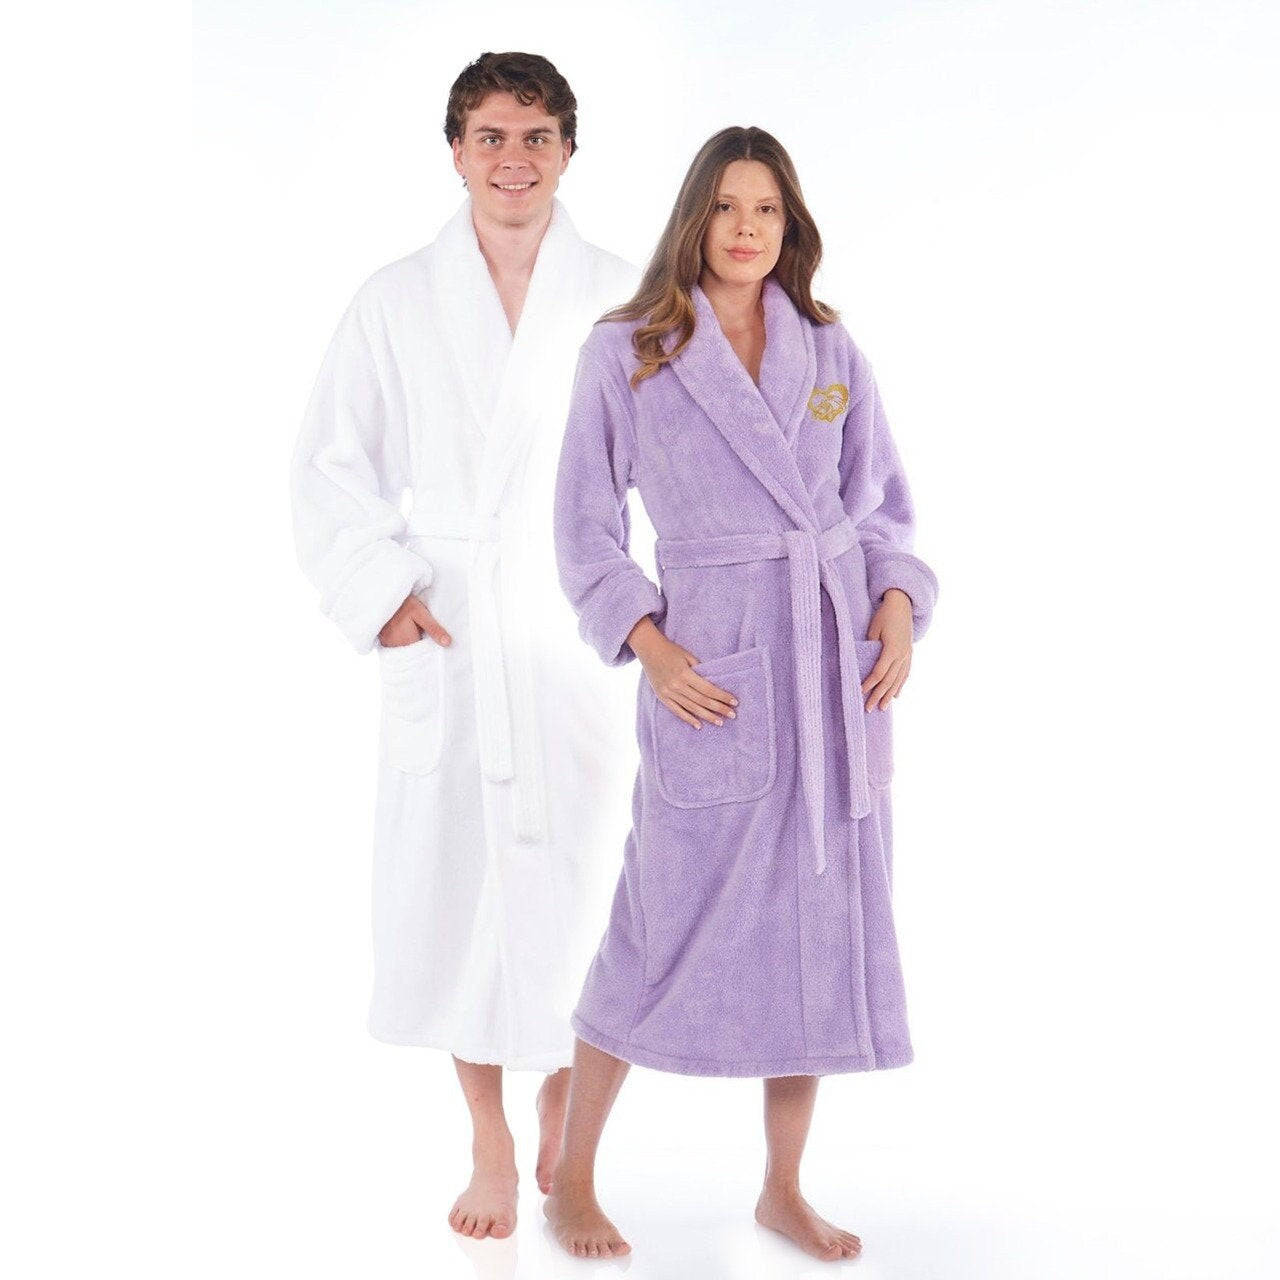 Women's Robe, Gift for Her, Personalized, Fleece Plush, Soft and Warm Shawl Bathrobe | Made in Turkey, Monogrammed Wedding, Birthday Gift